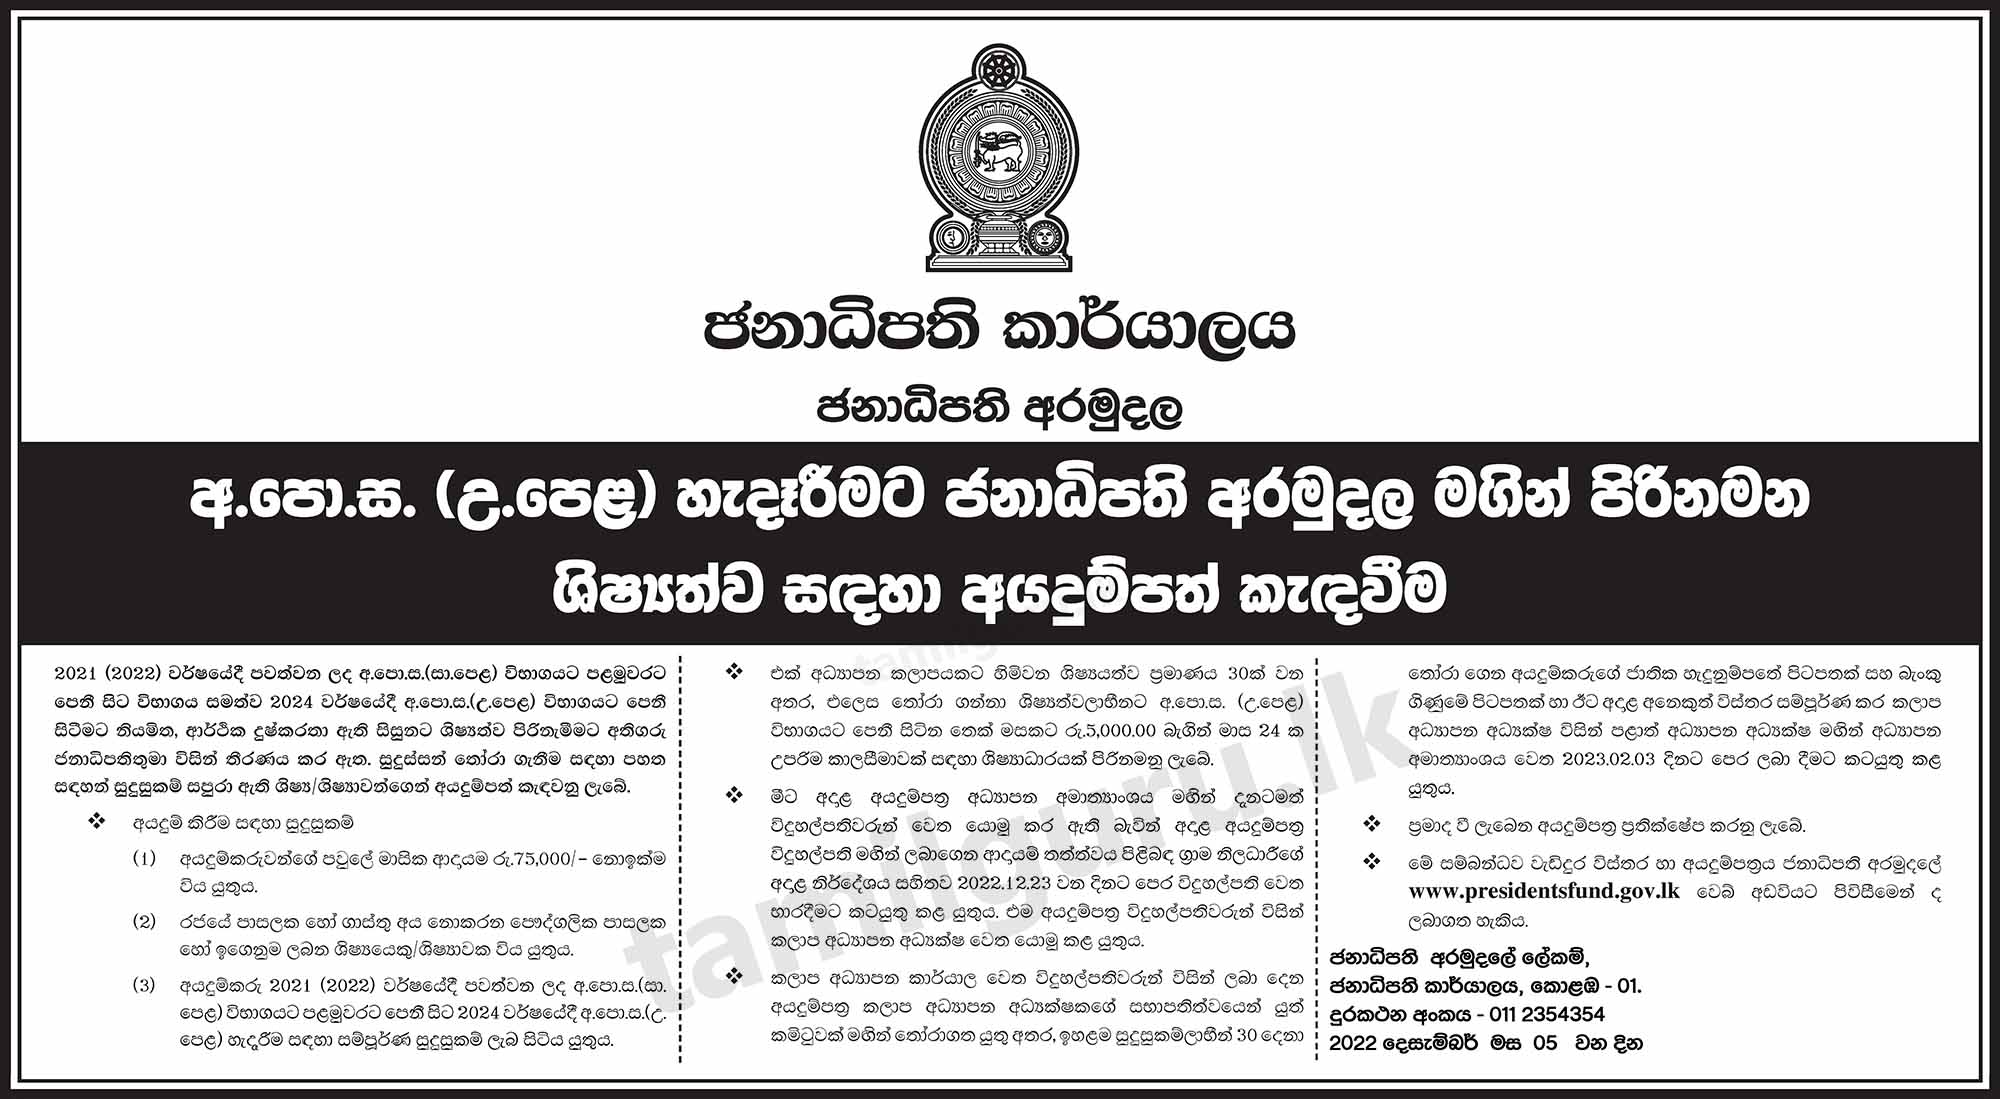 Scholarships to G.C.E. A/L Students 2023/24 - President's Fund, Sri Lanka